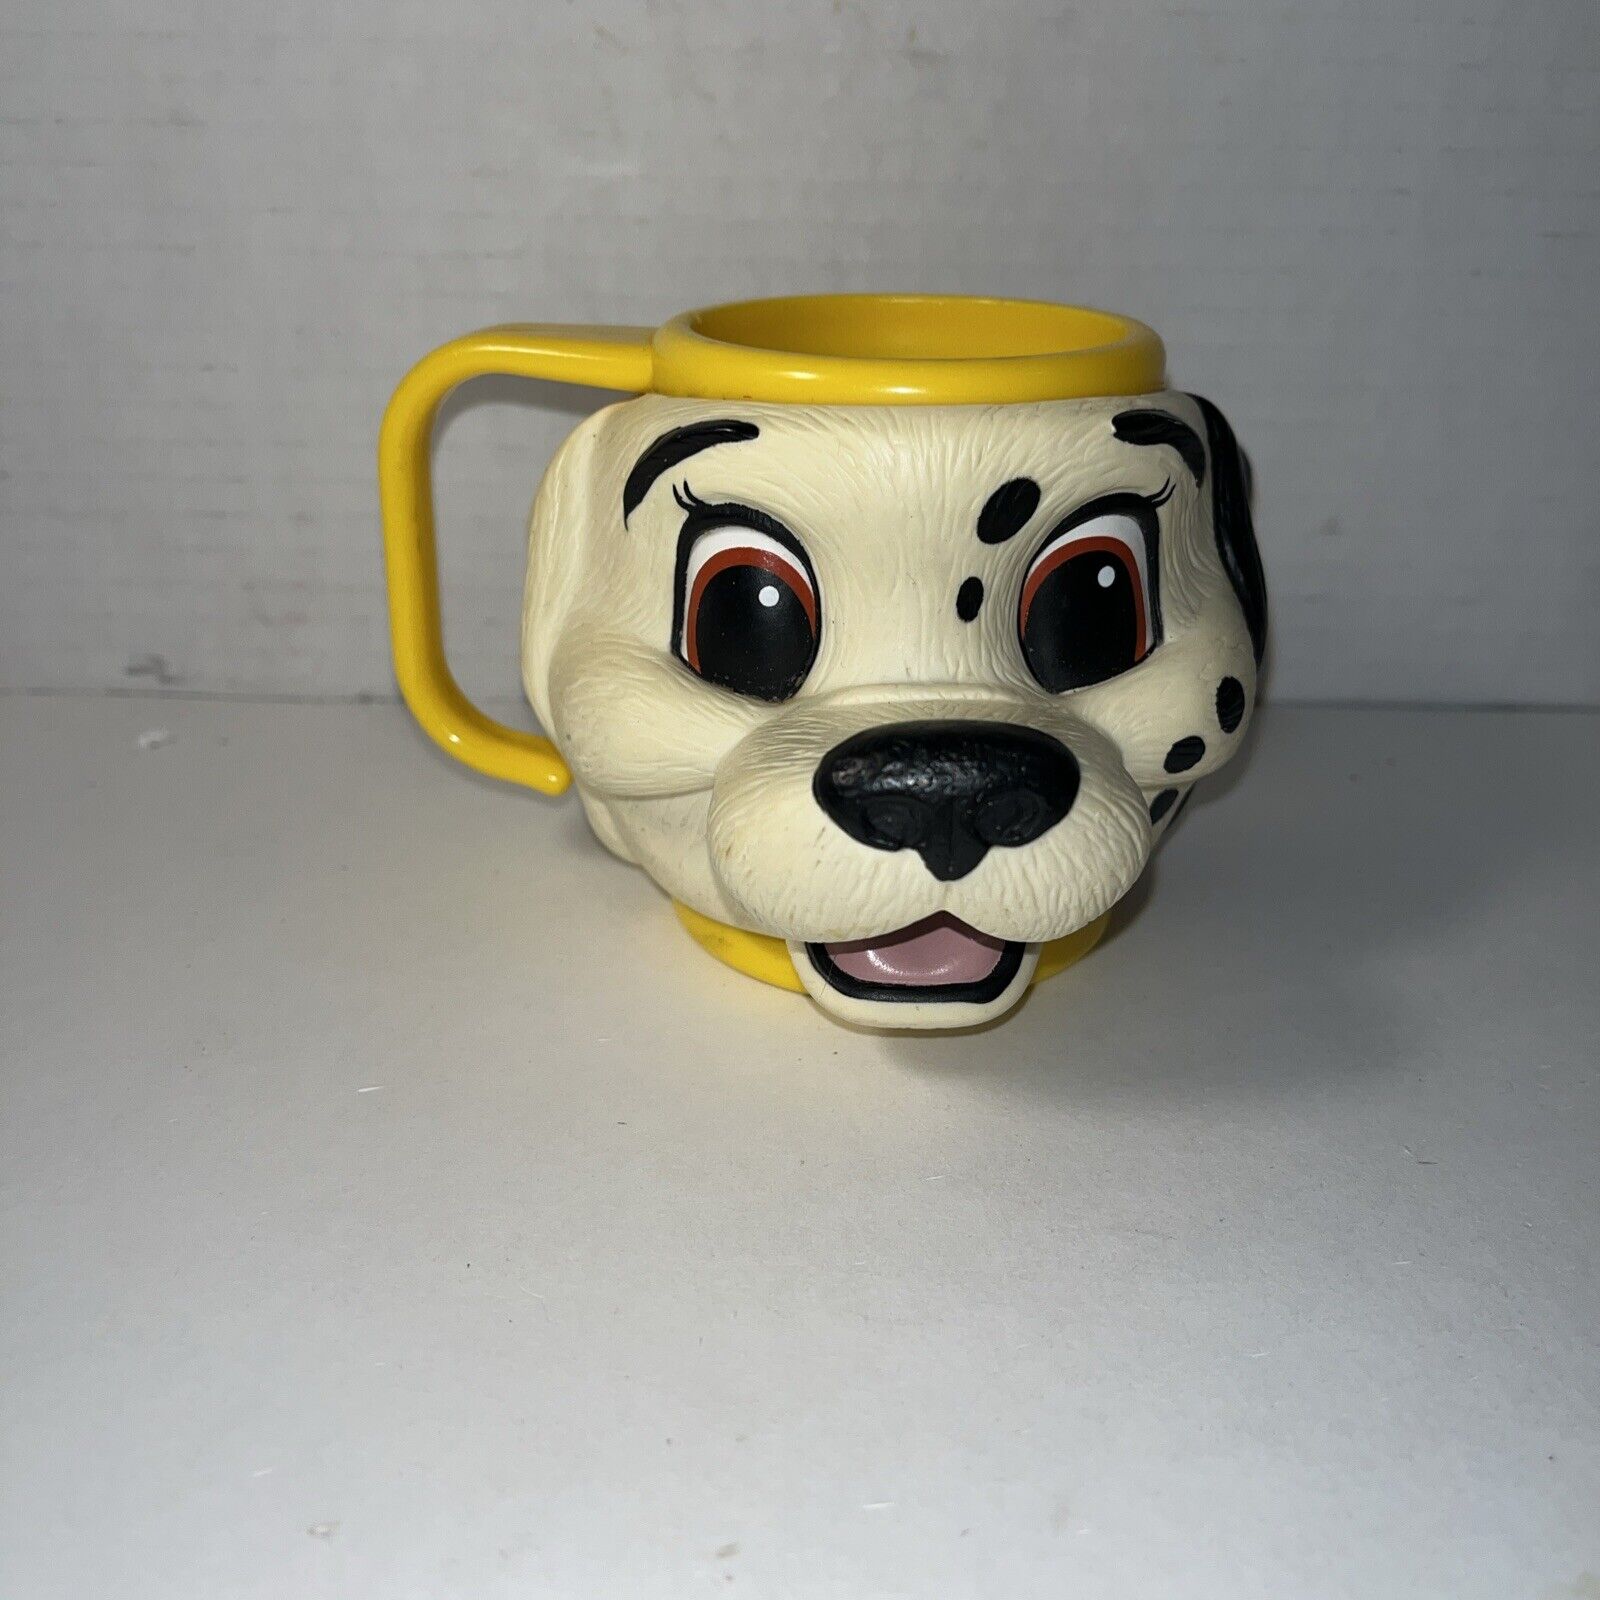 APPLAUSE Vintage Disney\'s 101 Dalmatians 3D Movie Character Mug Cup